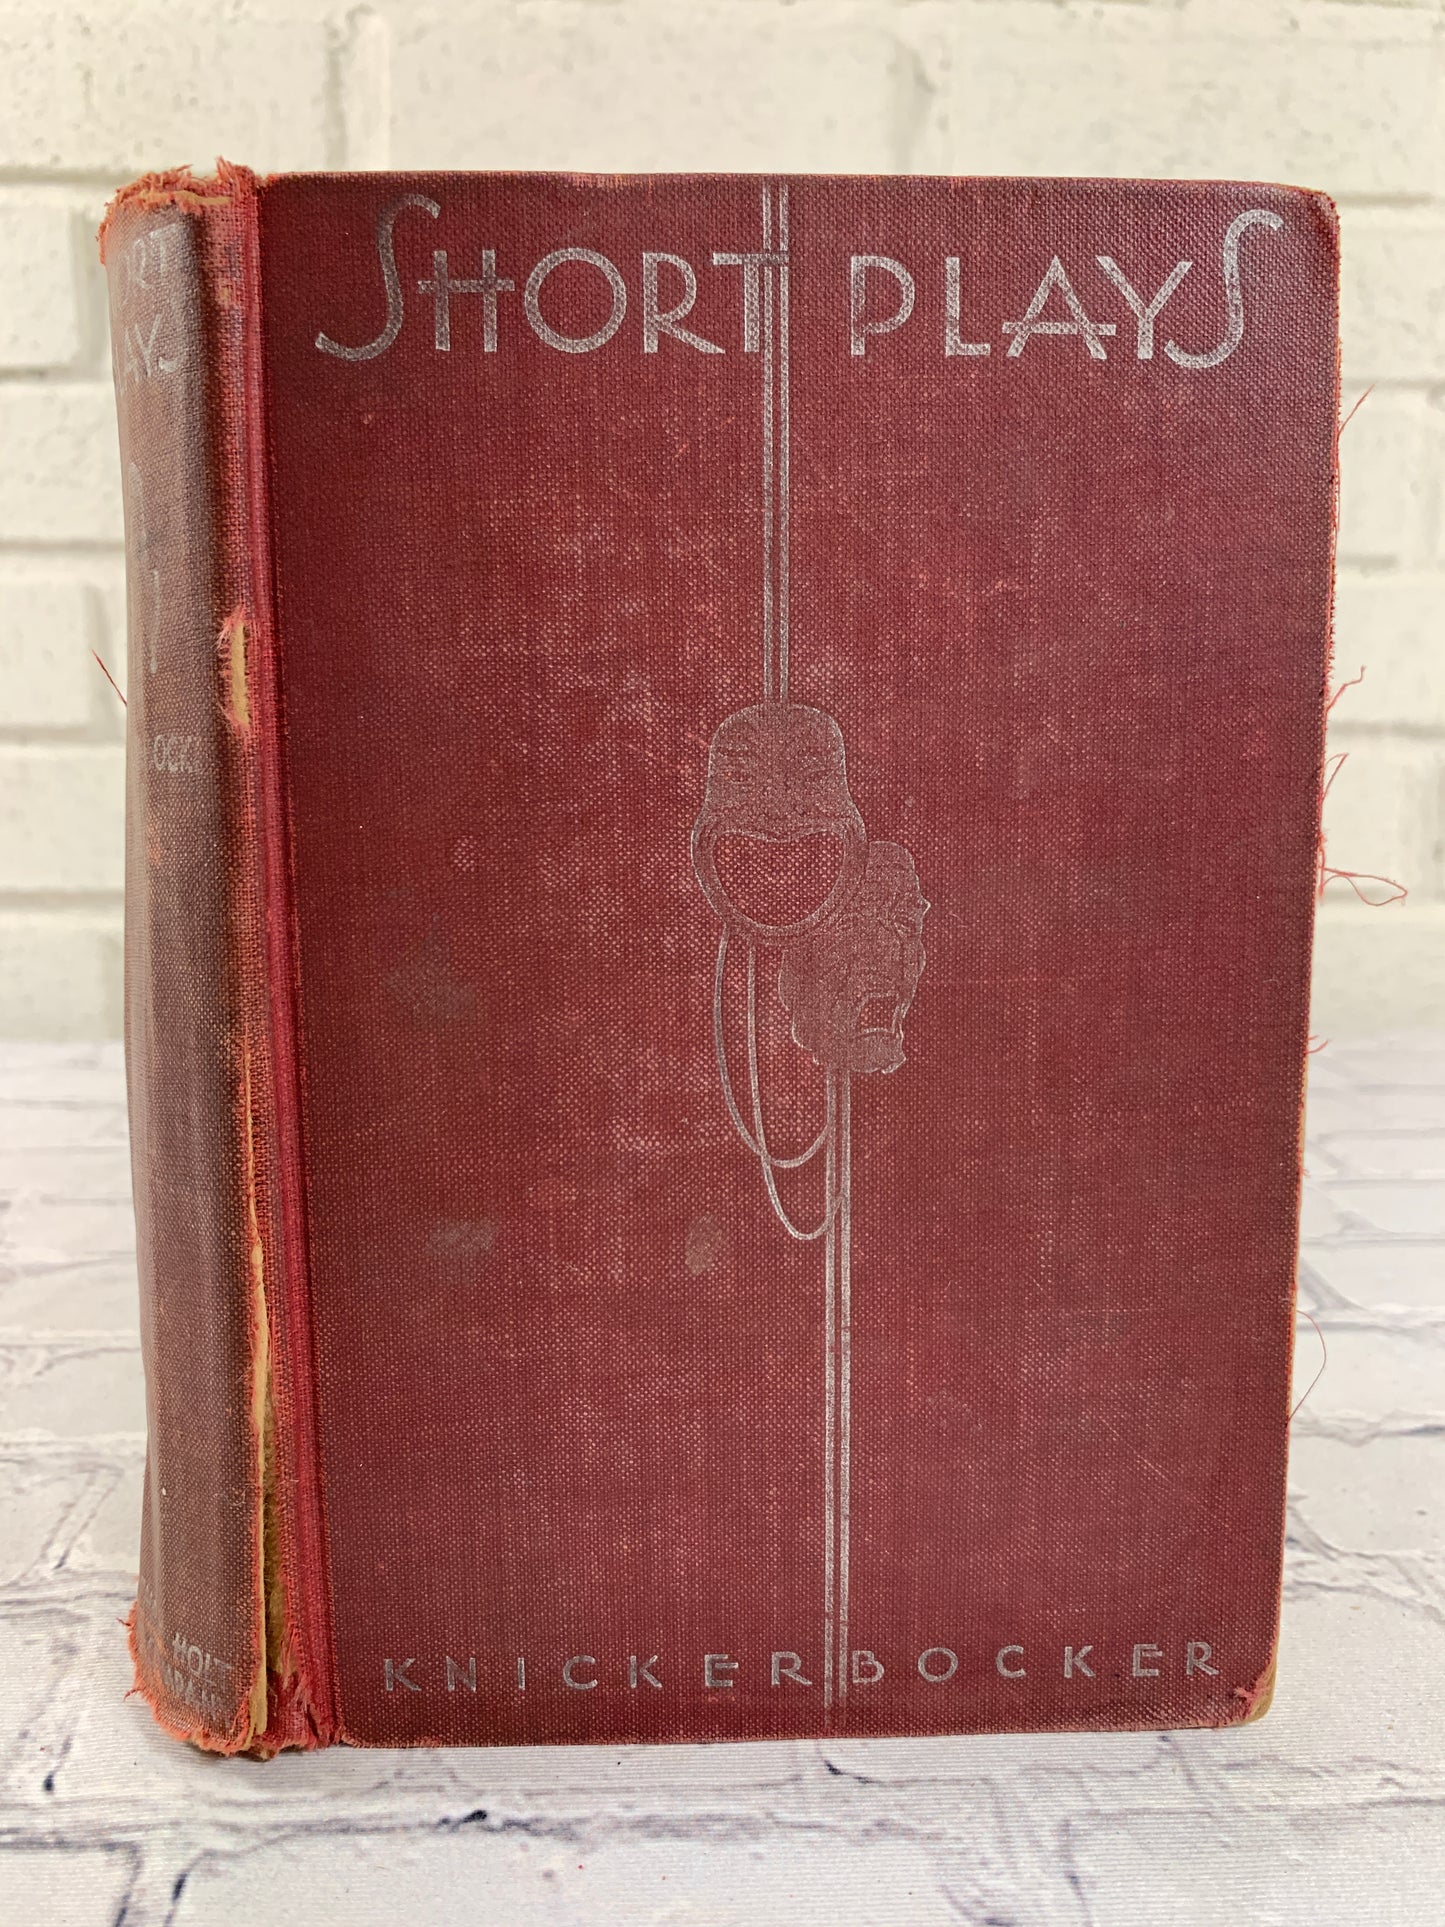 Short Plays edited by Edwin Van B. Knickerbocker [1931]